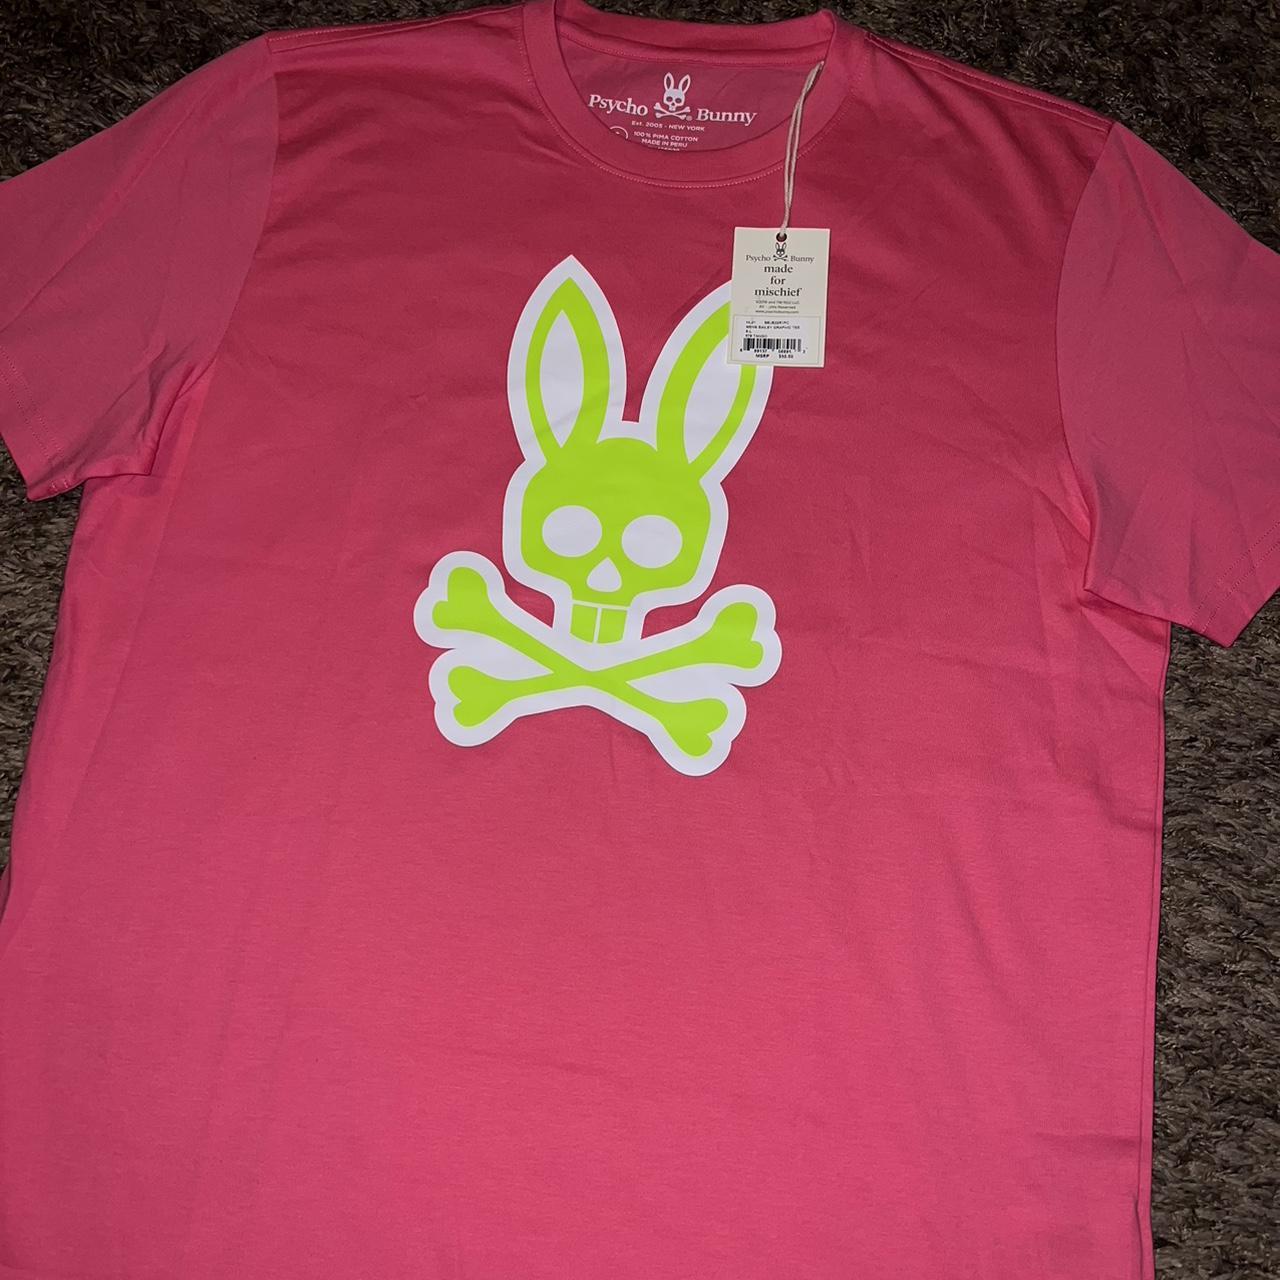 Psycho Bunny Men's Pink T-shirt